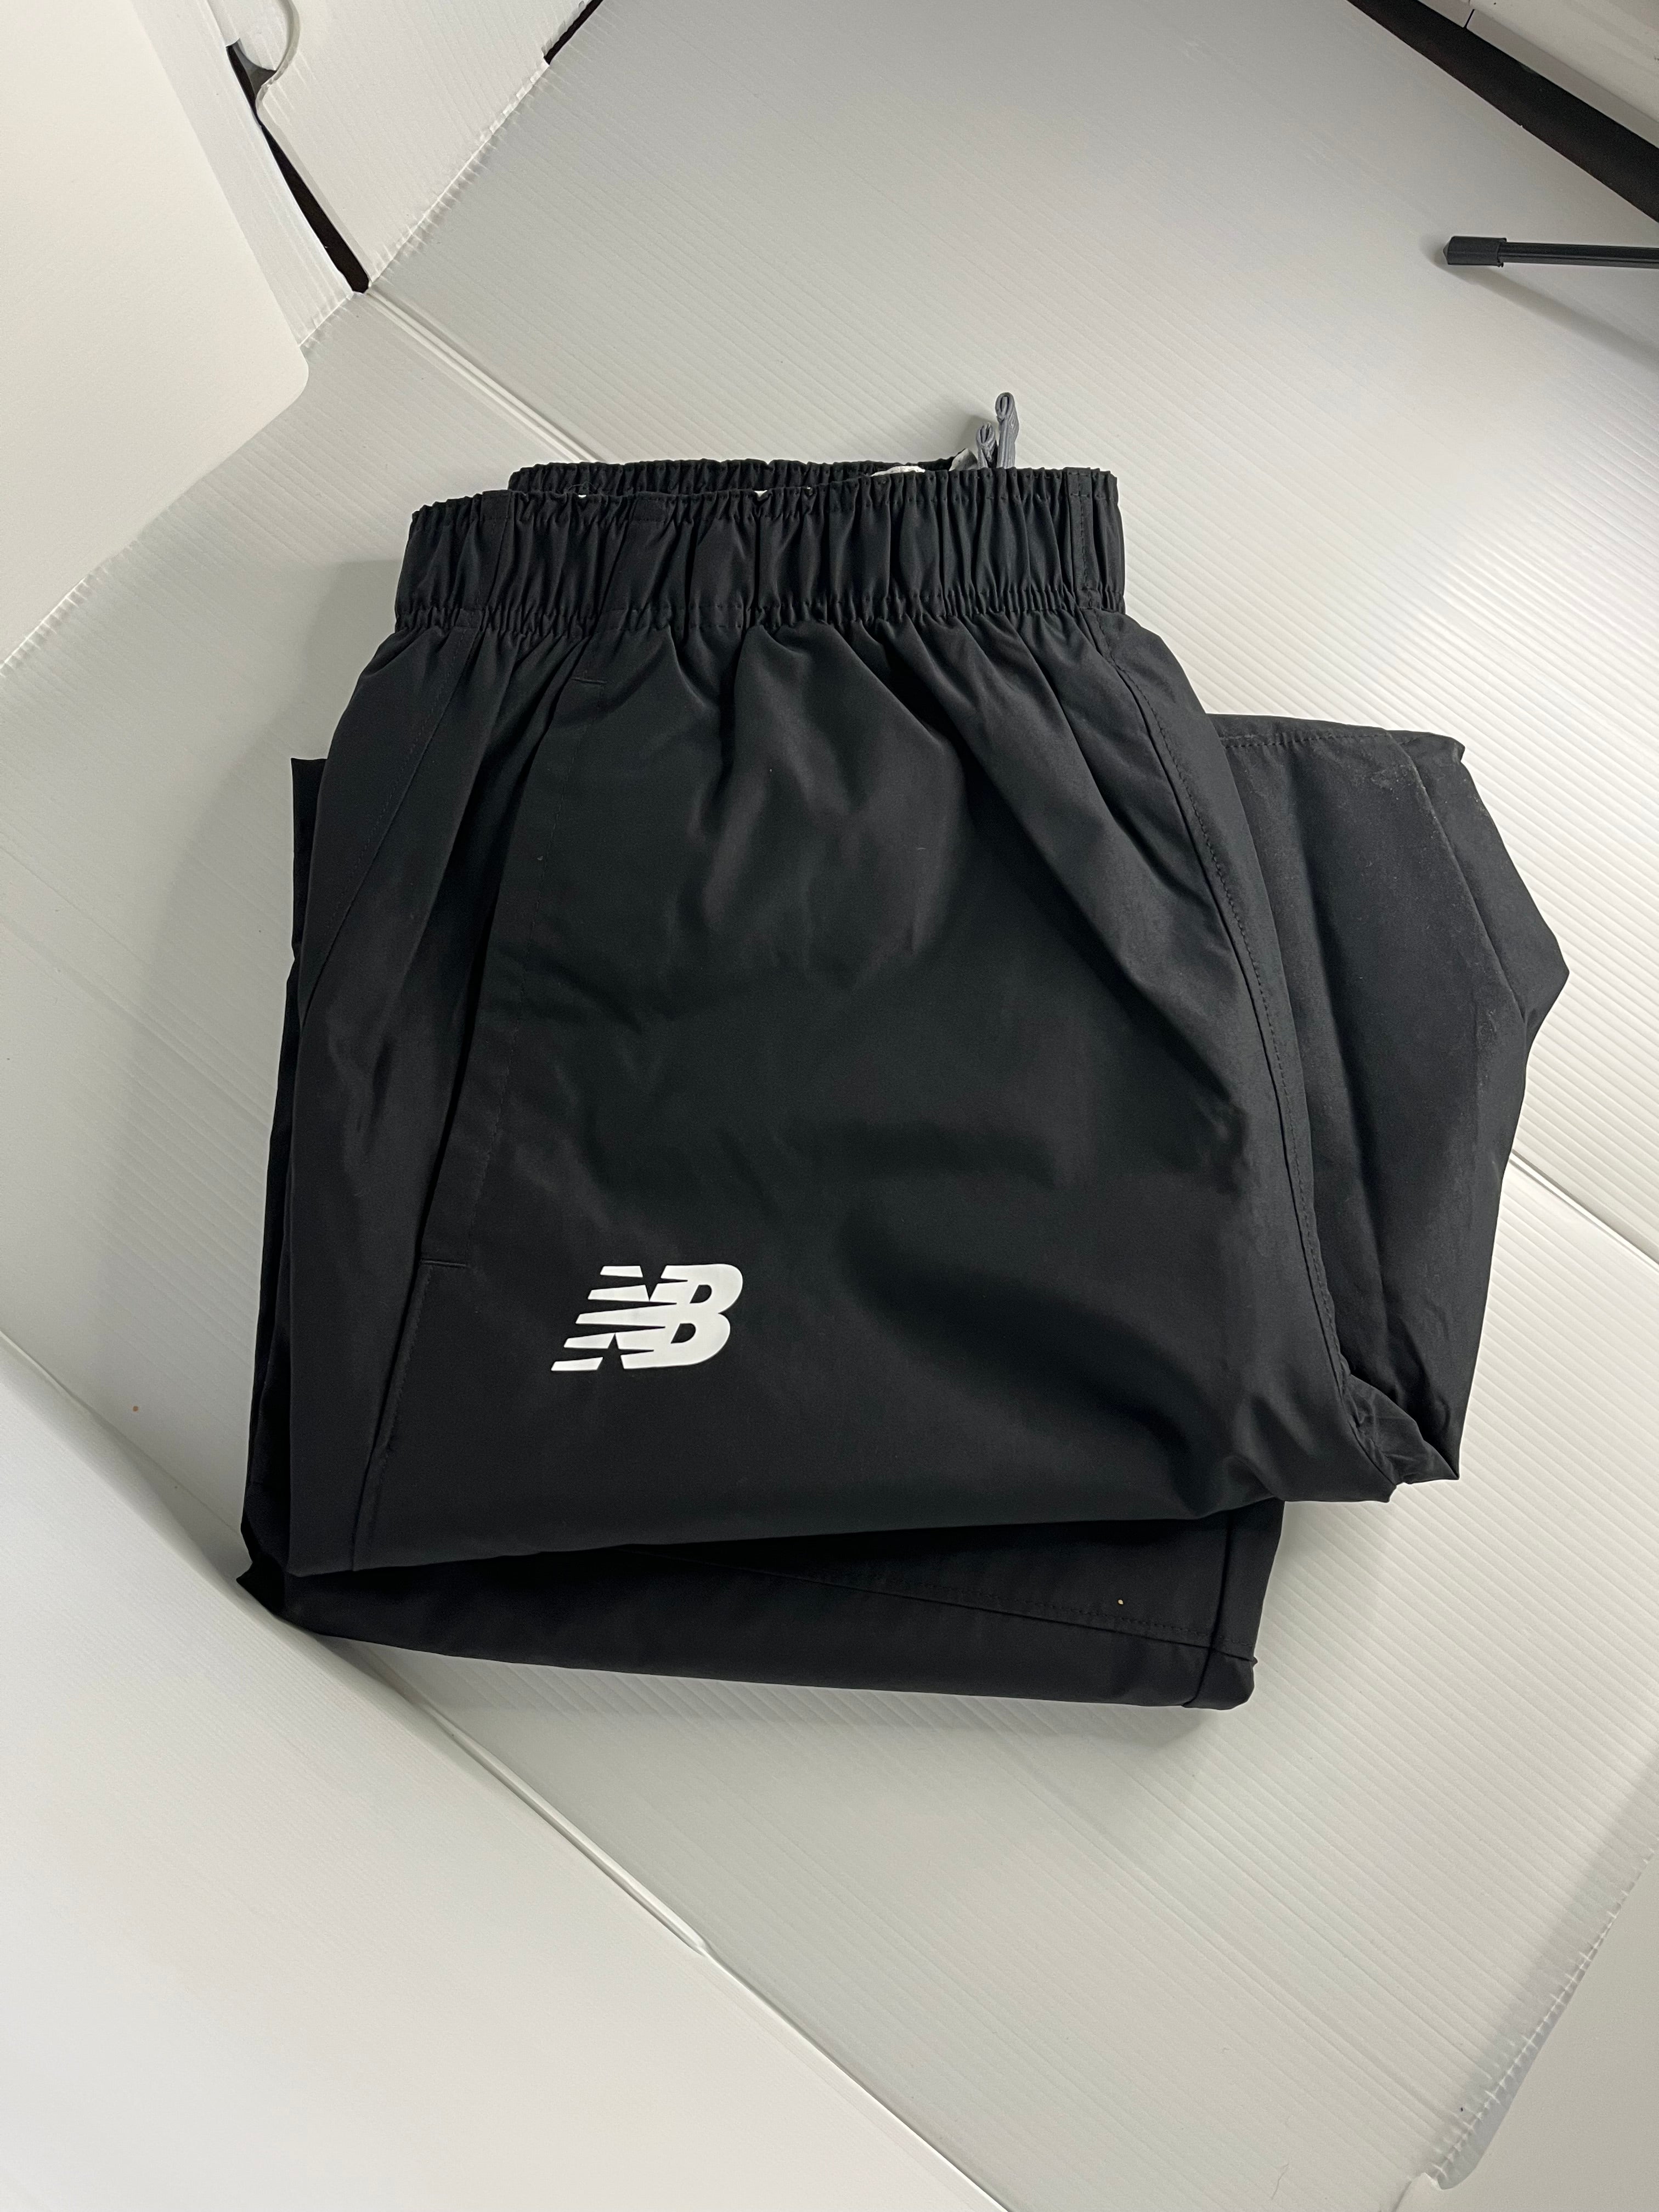 New Black Large New Balance Warm Up Pants